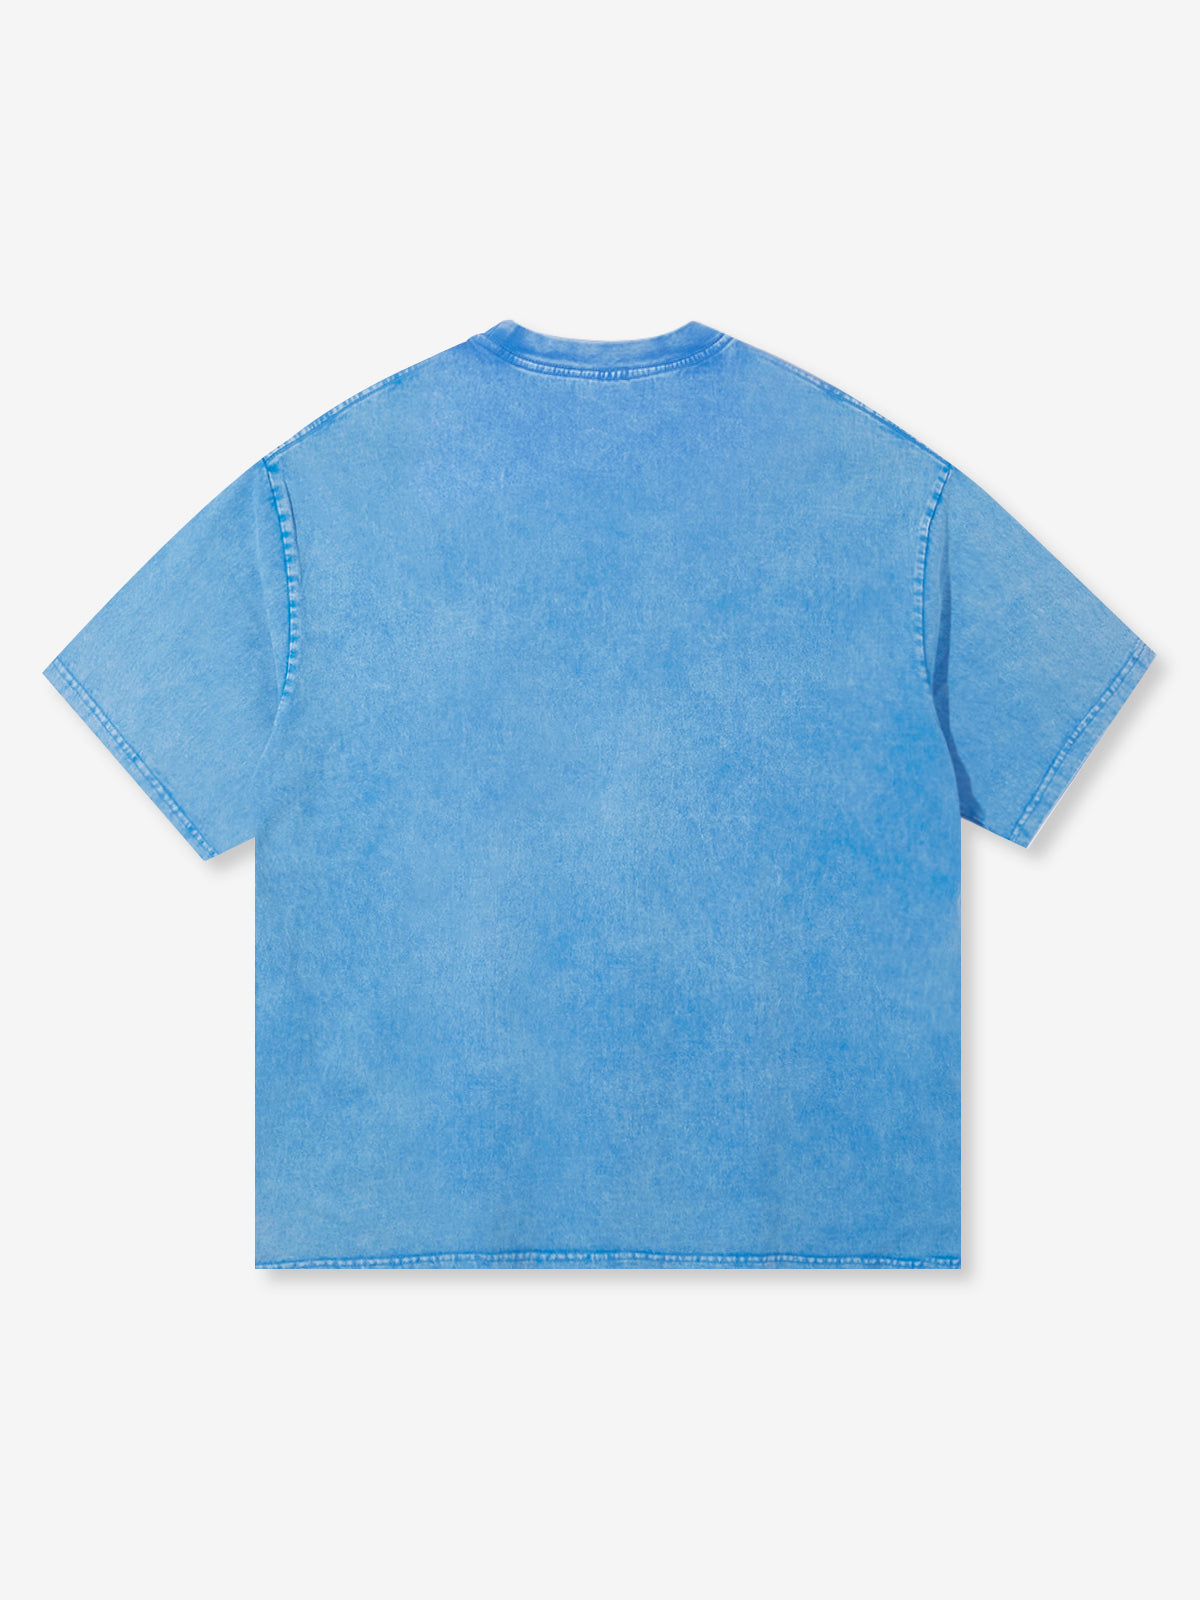 BOUNCE BACK© Diamond Thorn Crown Blue 300g T-Shirt